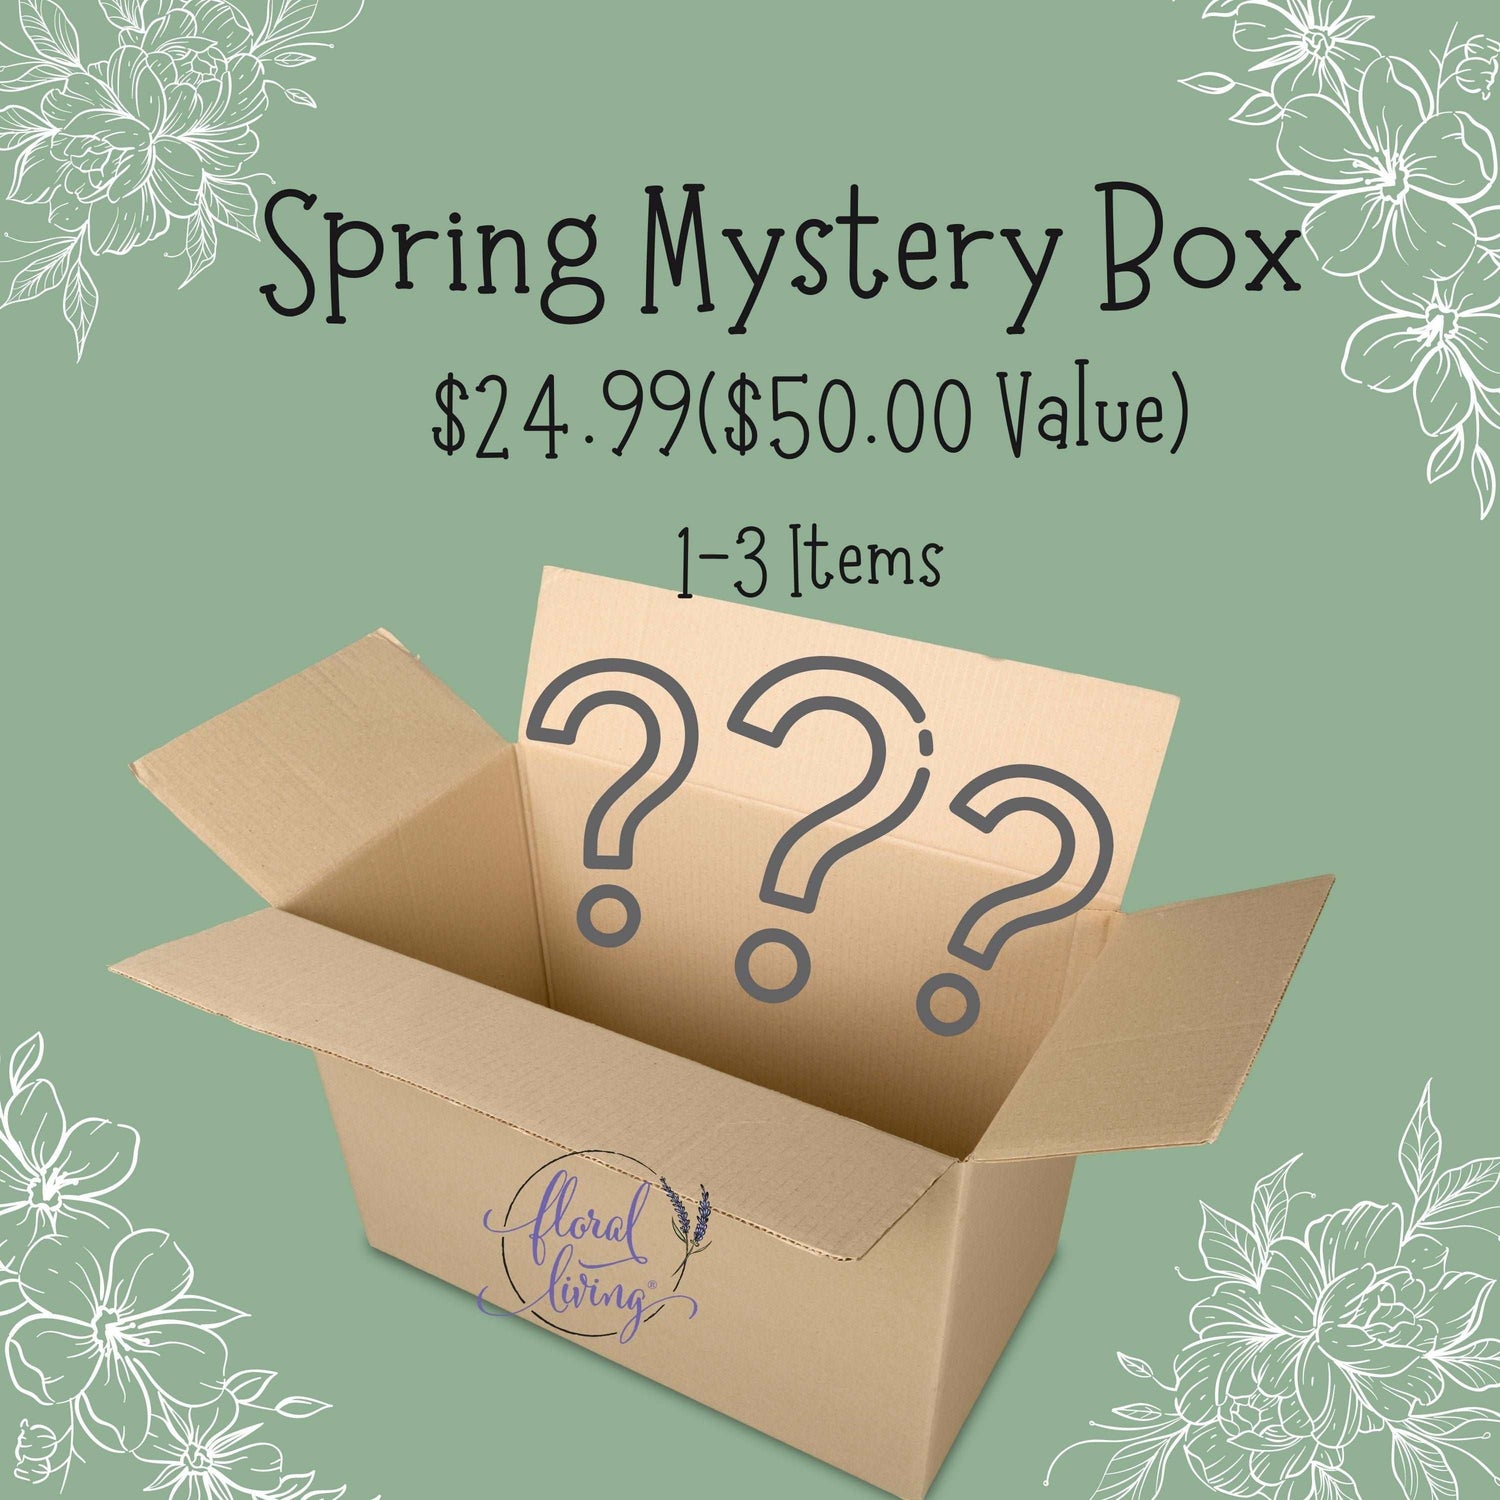 24.99 Spring Mystery Box!